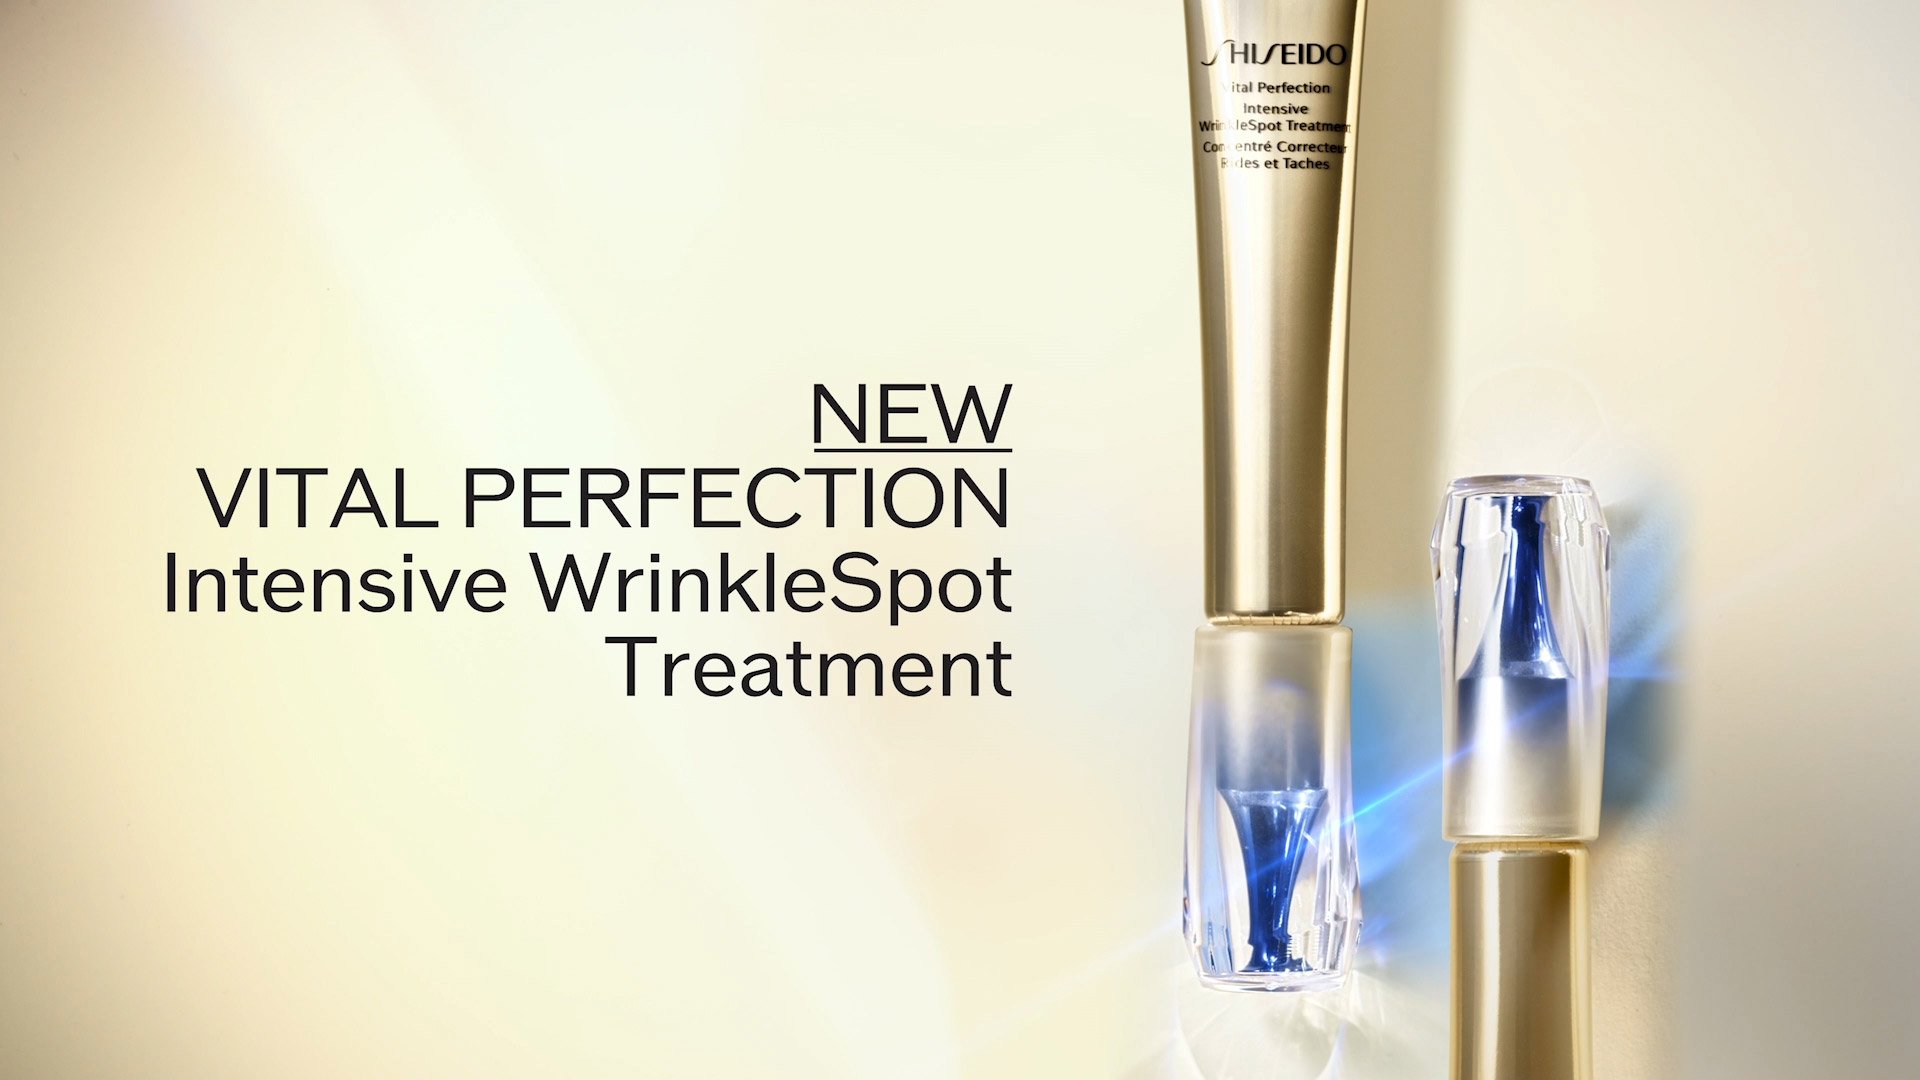 NEW Vital Perfection Intensive WrinkleSpot Treatment